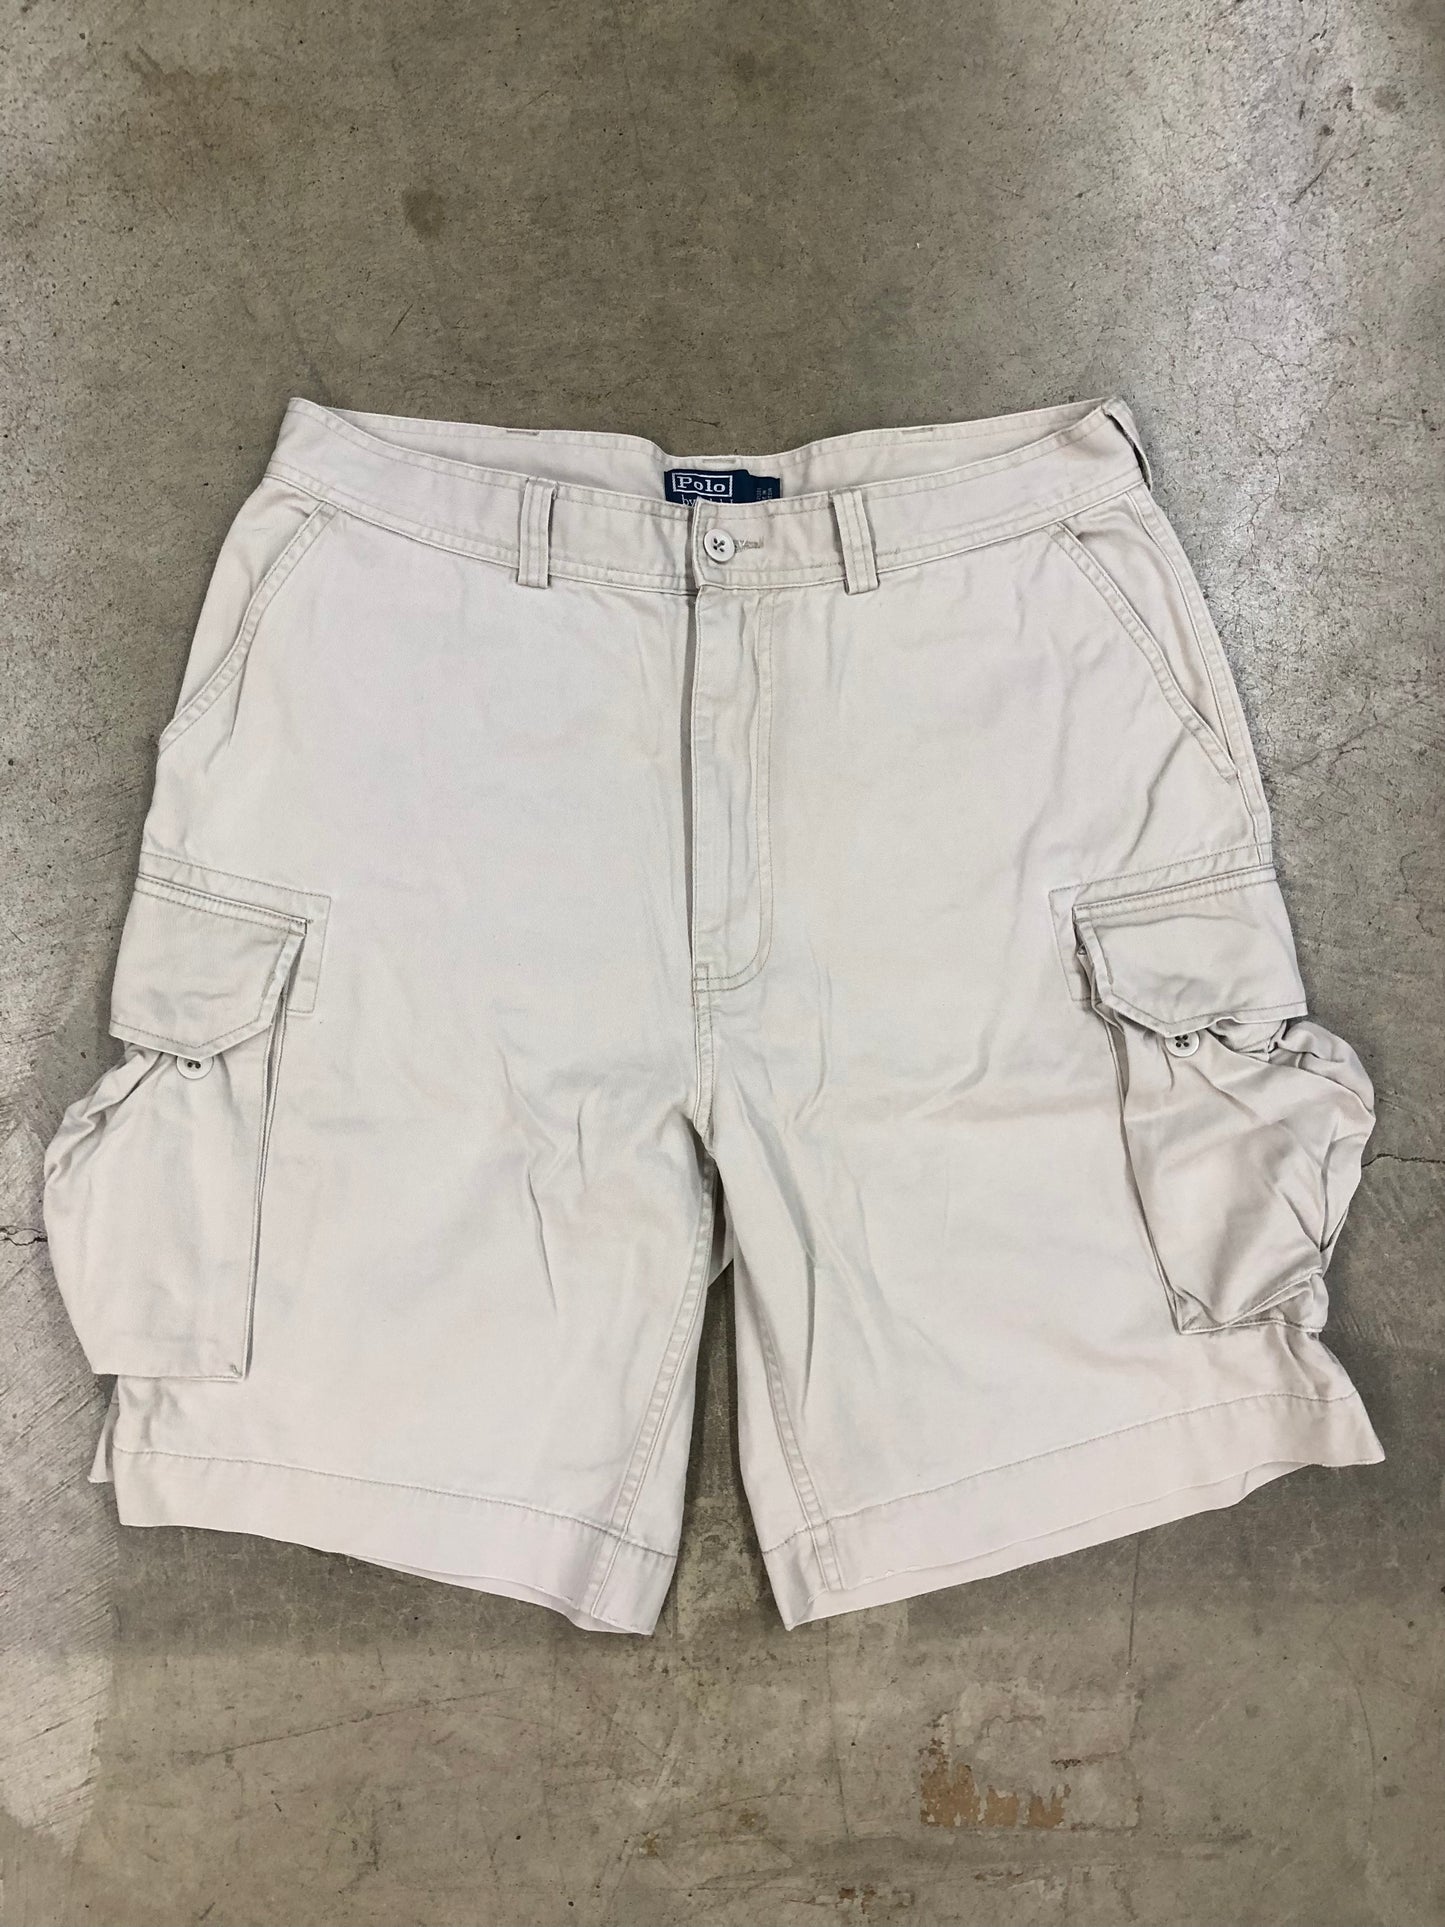 VTG Ralph Lauren Classic Polo Chino Shorts Sz 36x11